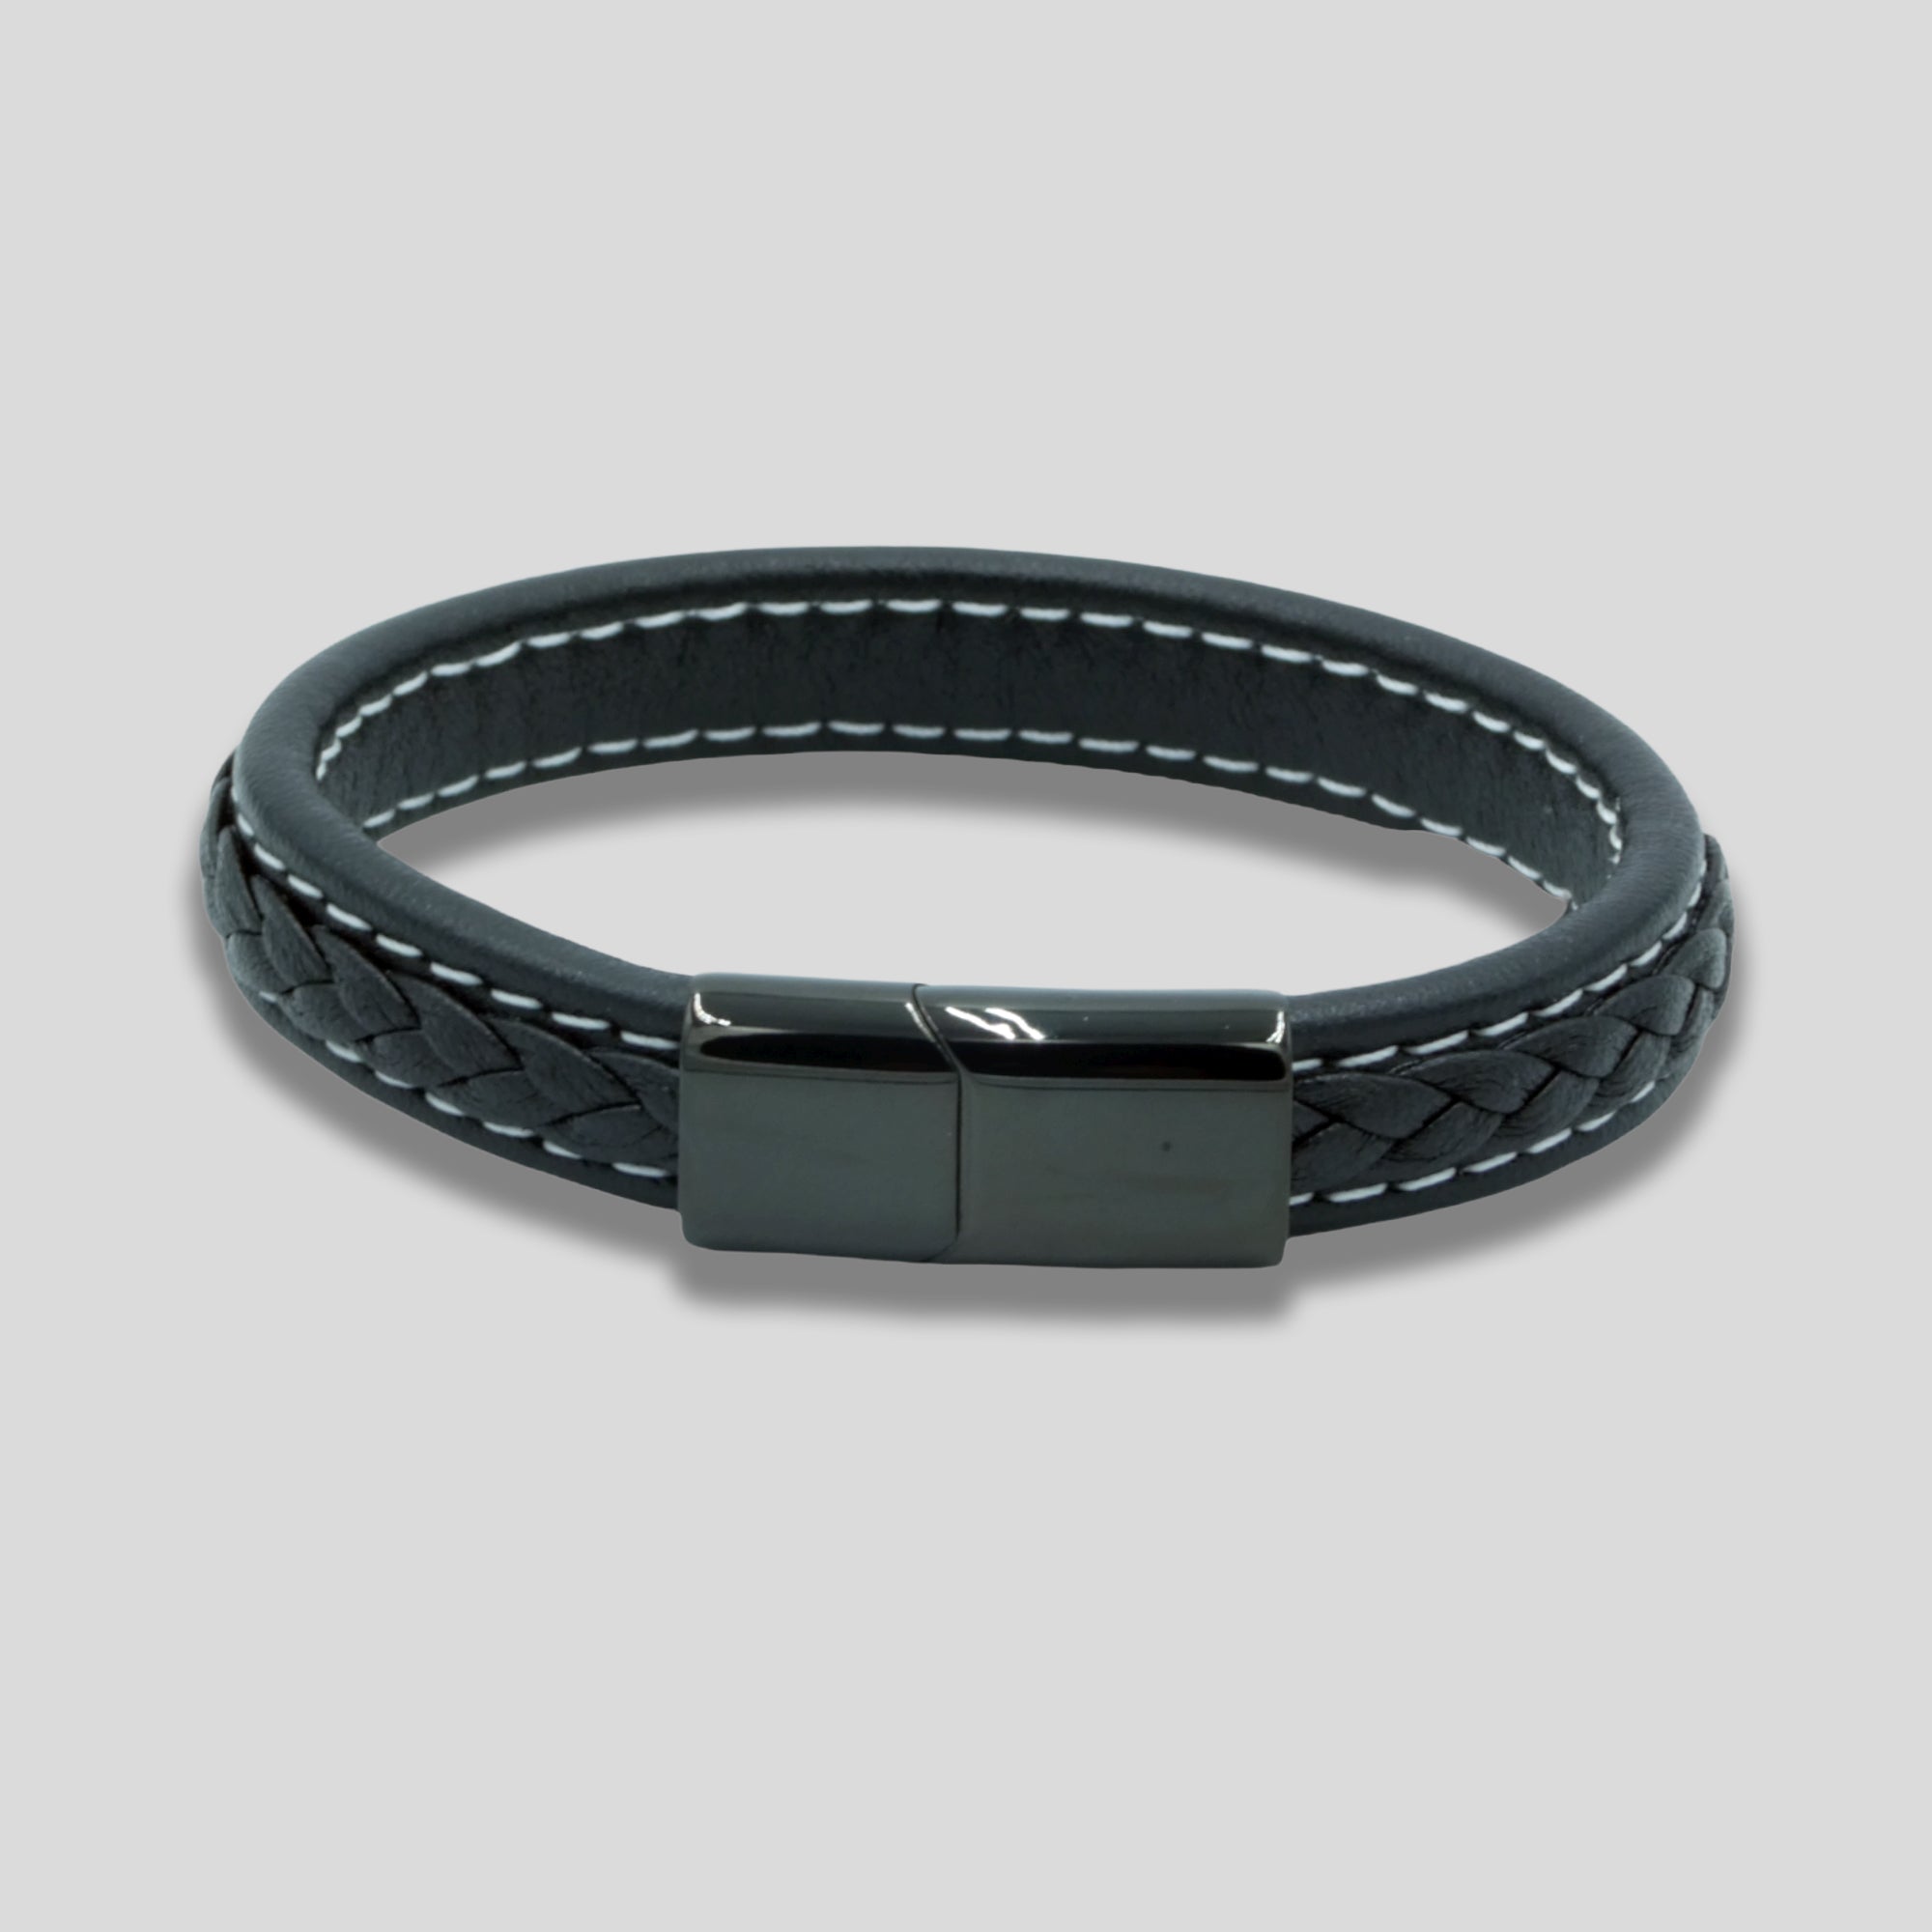 Bracelet en cuir noir avec fermoir noir